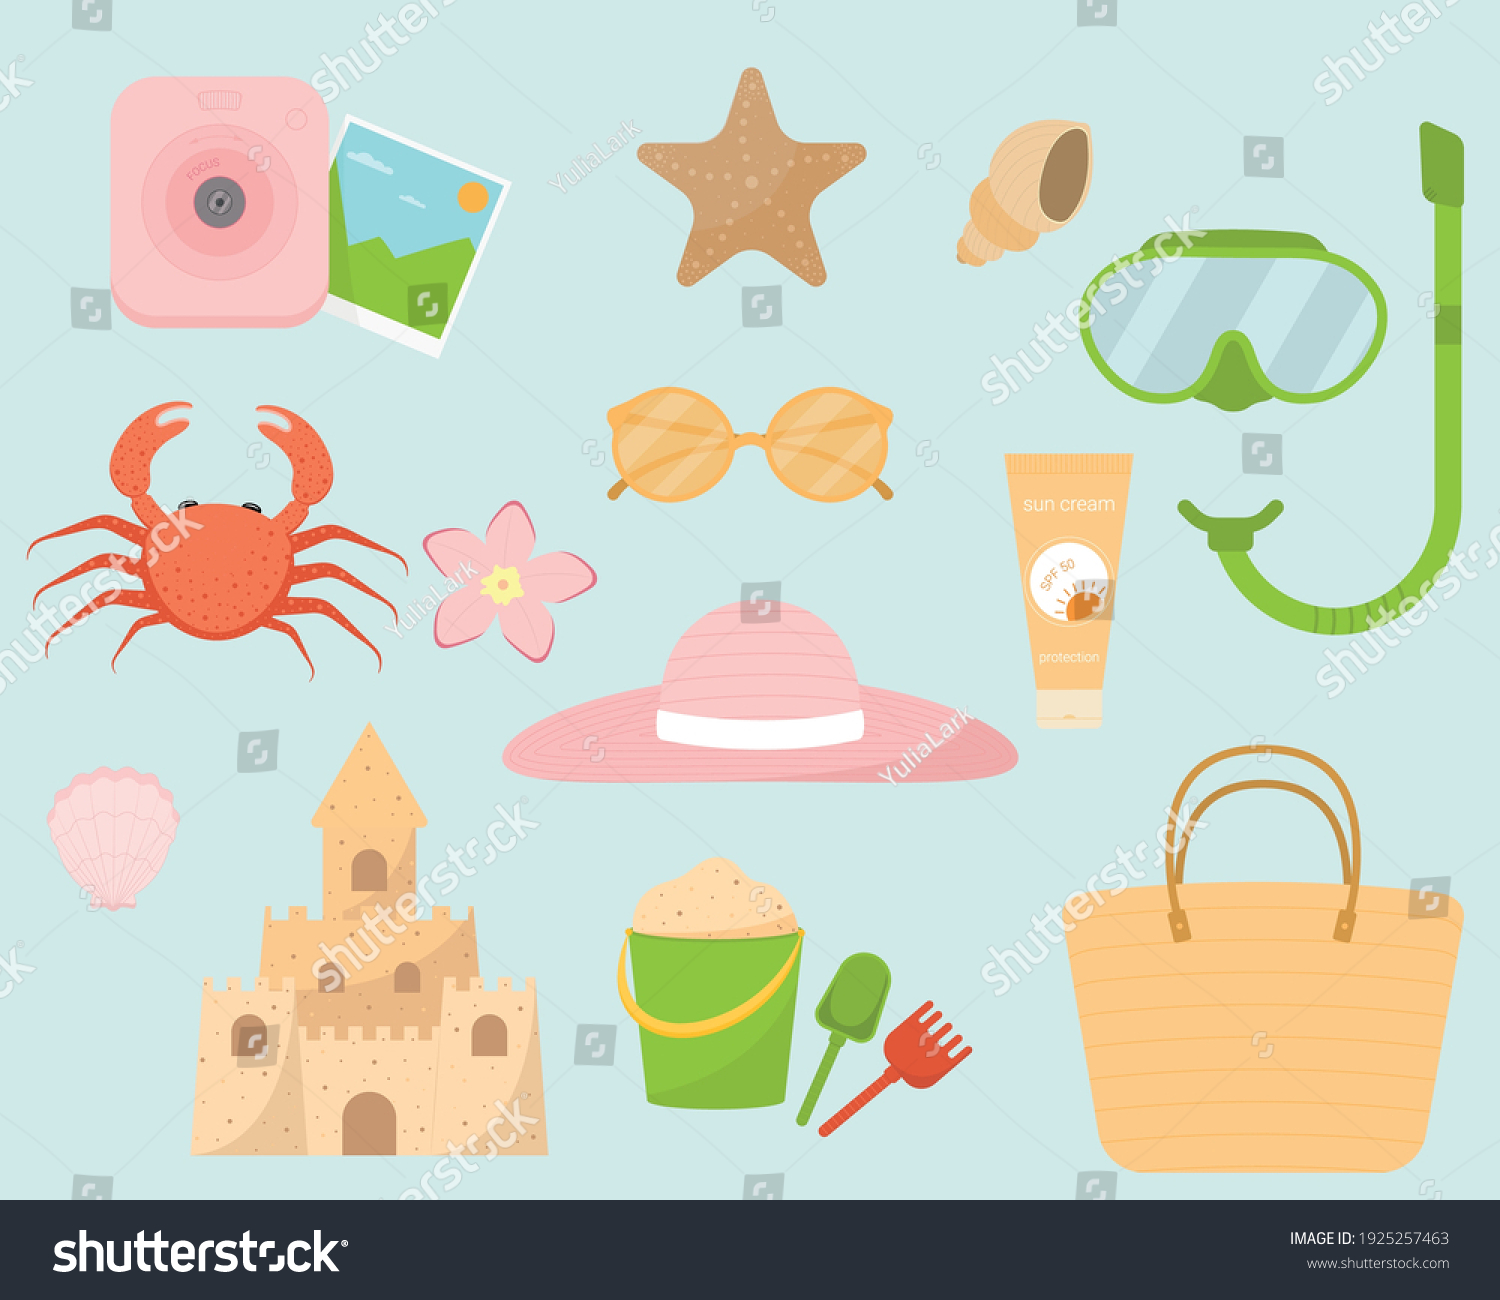 SVG of Summer items. Camera, sunglasses, sunscreen, beach bag, snorkeling mask and snorkel, shells, sun hat, crab, sand castle, flower, sand bucket, sand scoop and rake, starfish. Vector illustration. svg